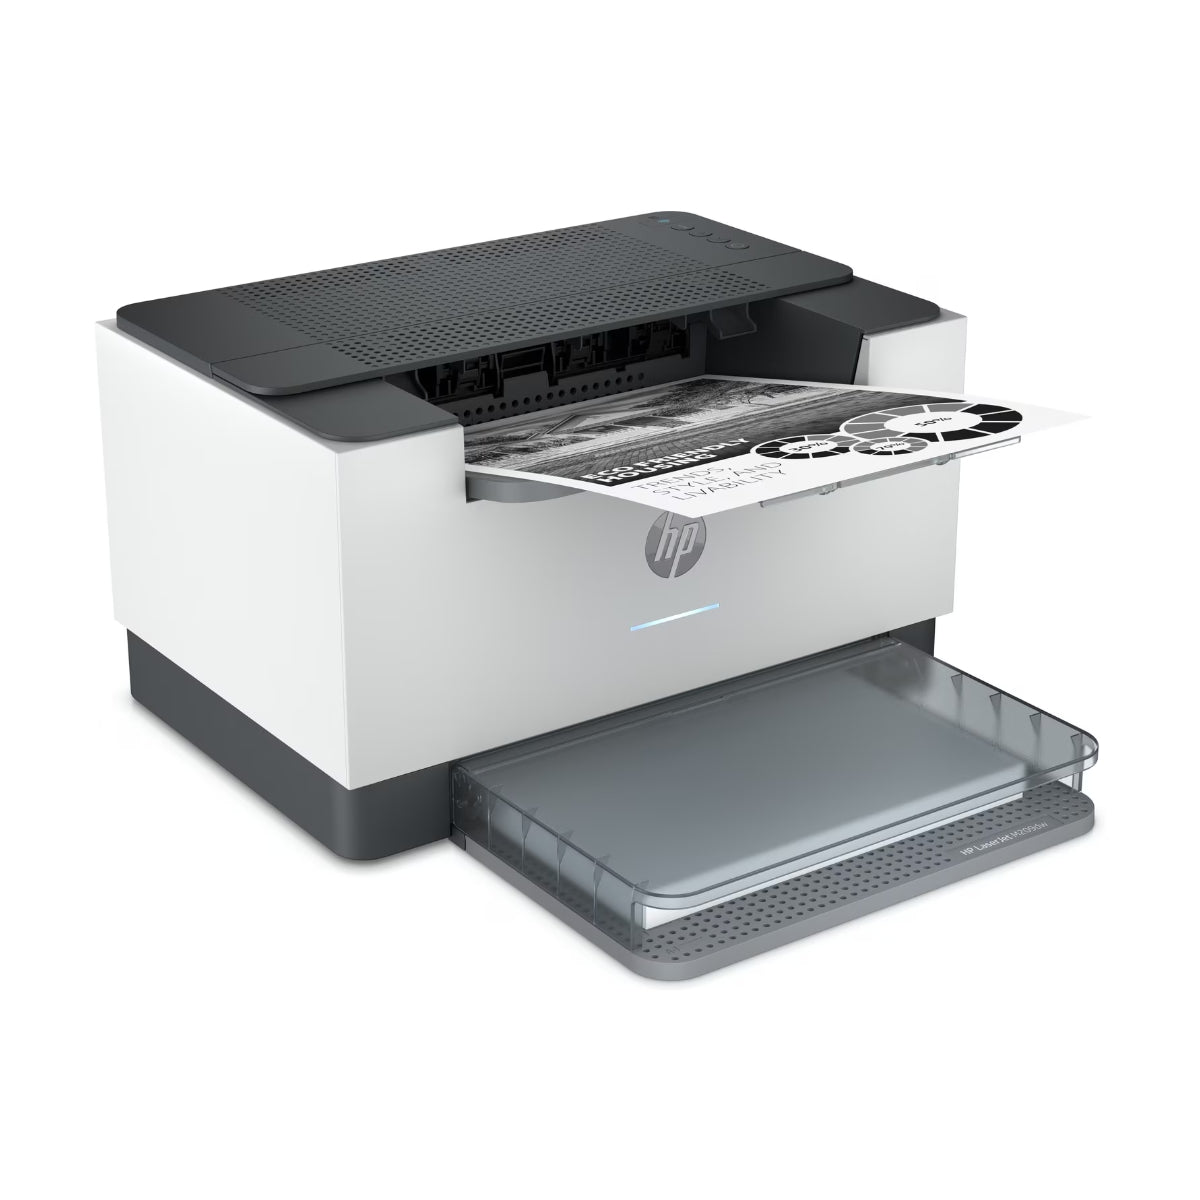 Imprimante HP DeskJet 3755 All-in-One - Cartouches Certifiées